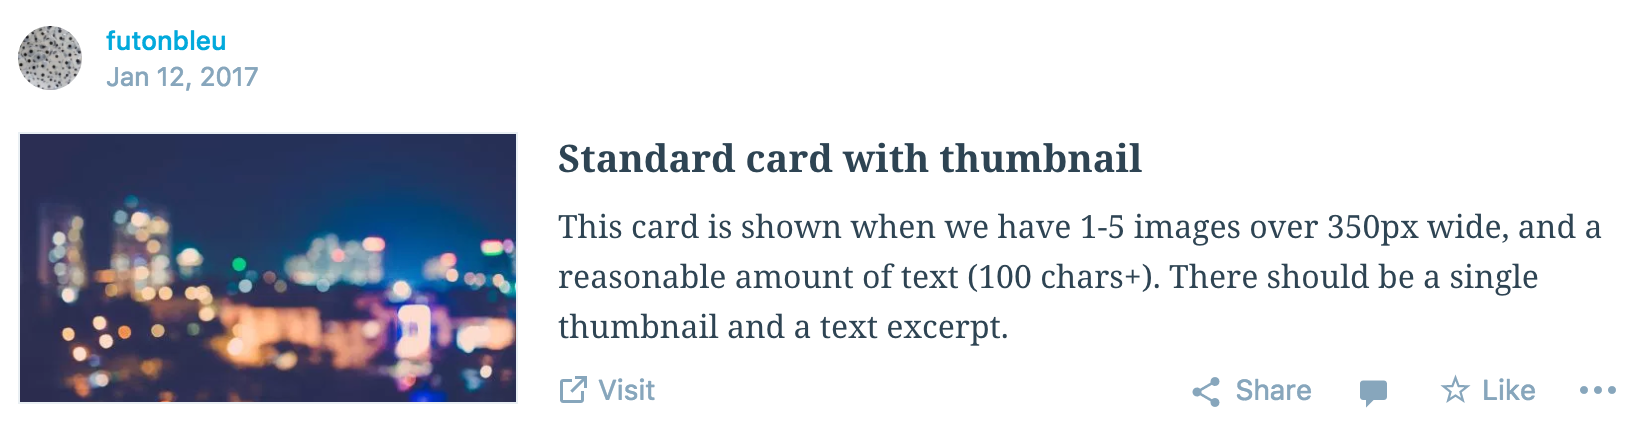 Standard post card